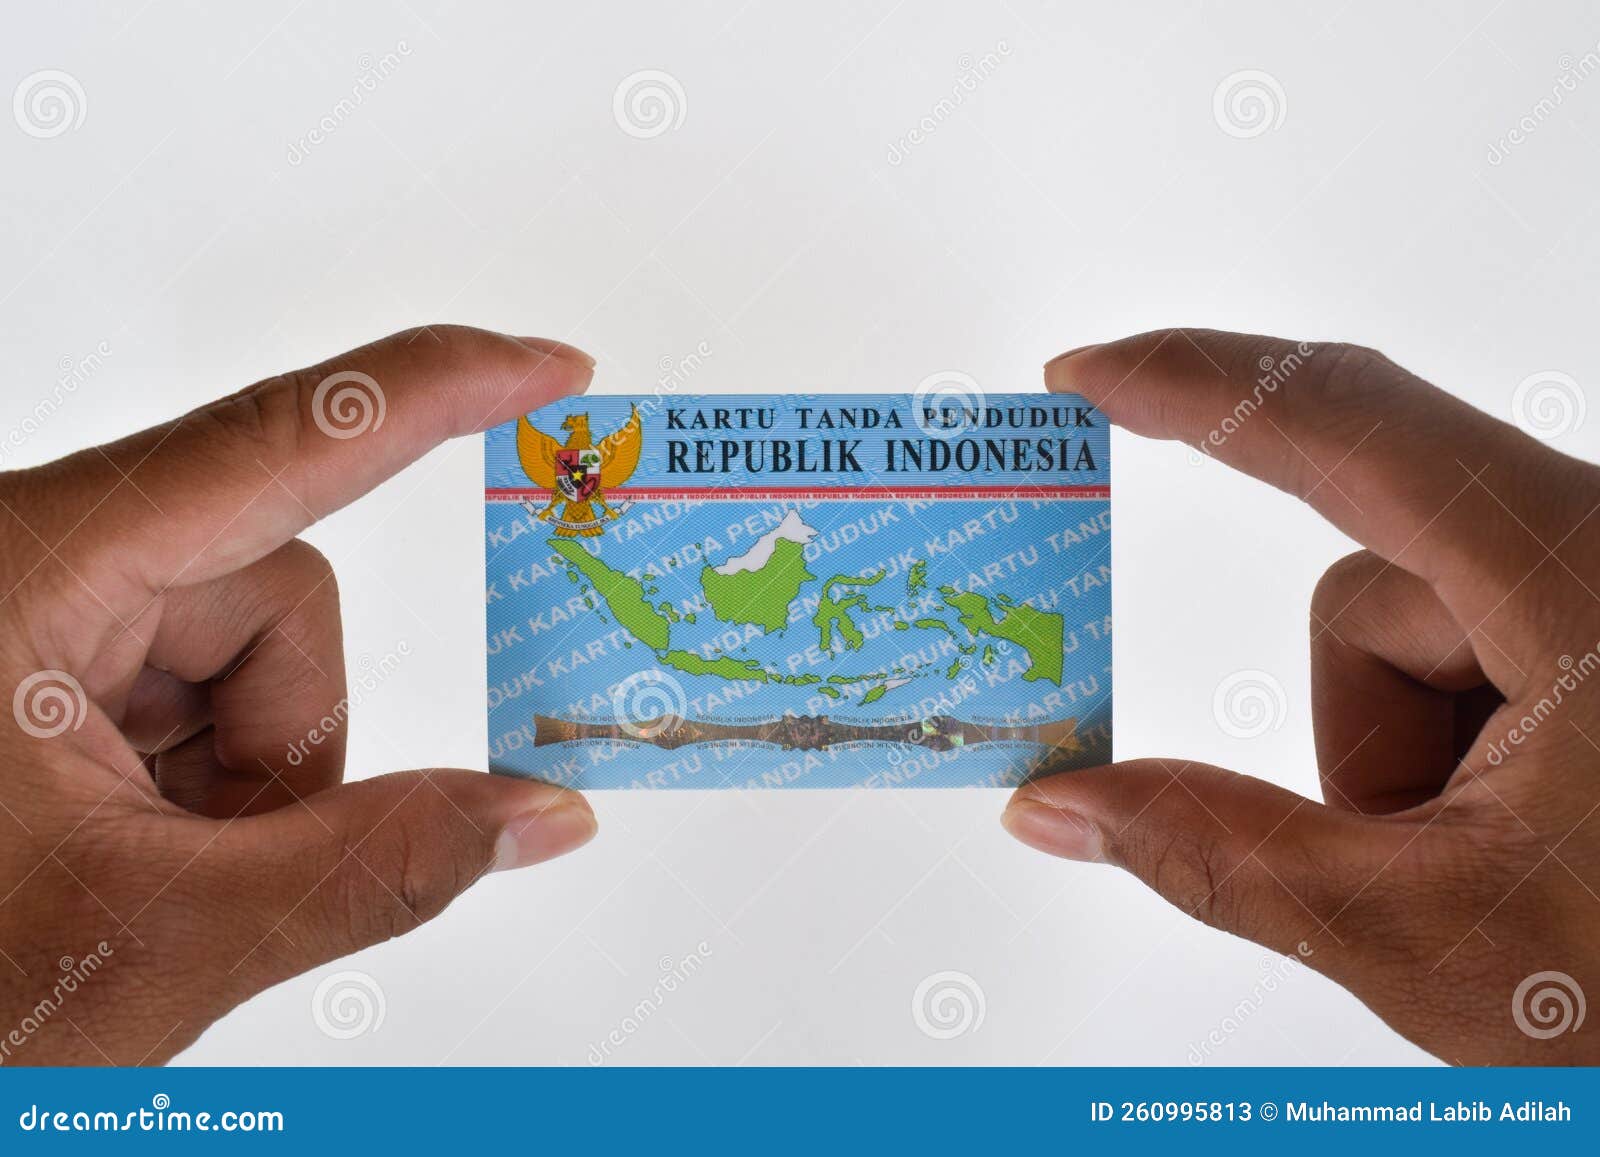 TextIn - 在线免费体验中心 - 印尼身份证